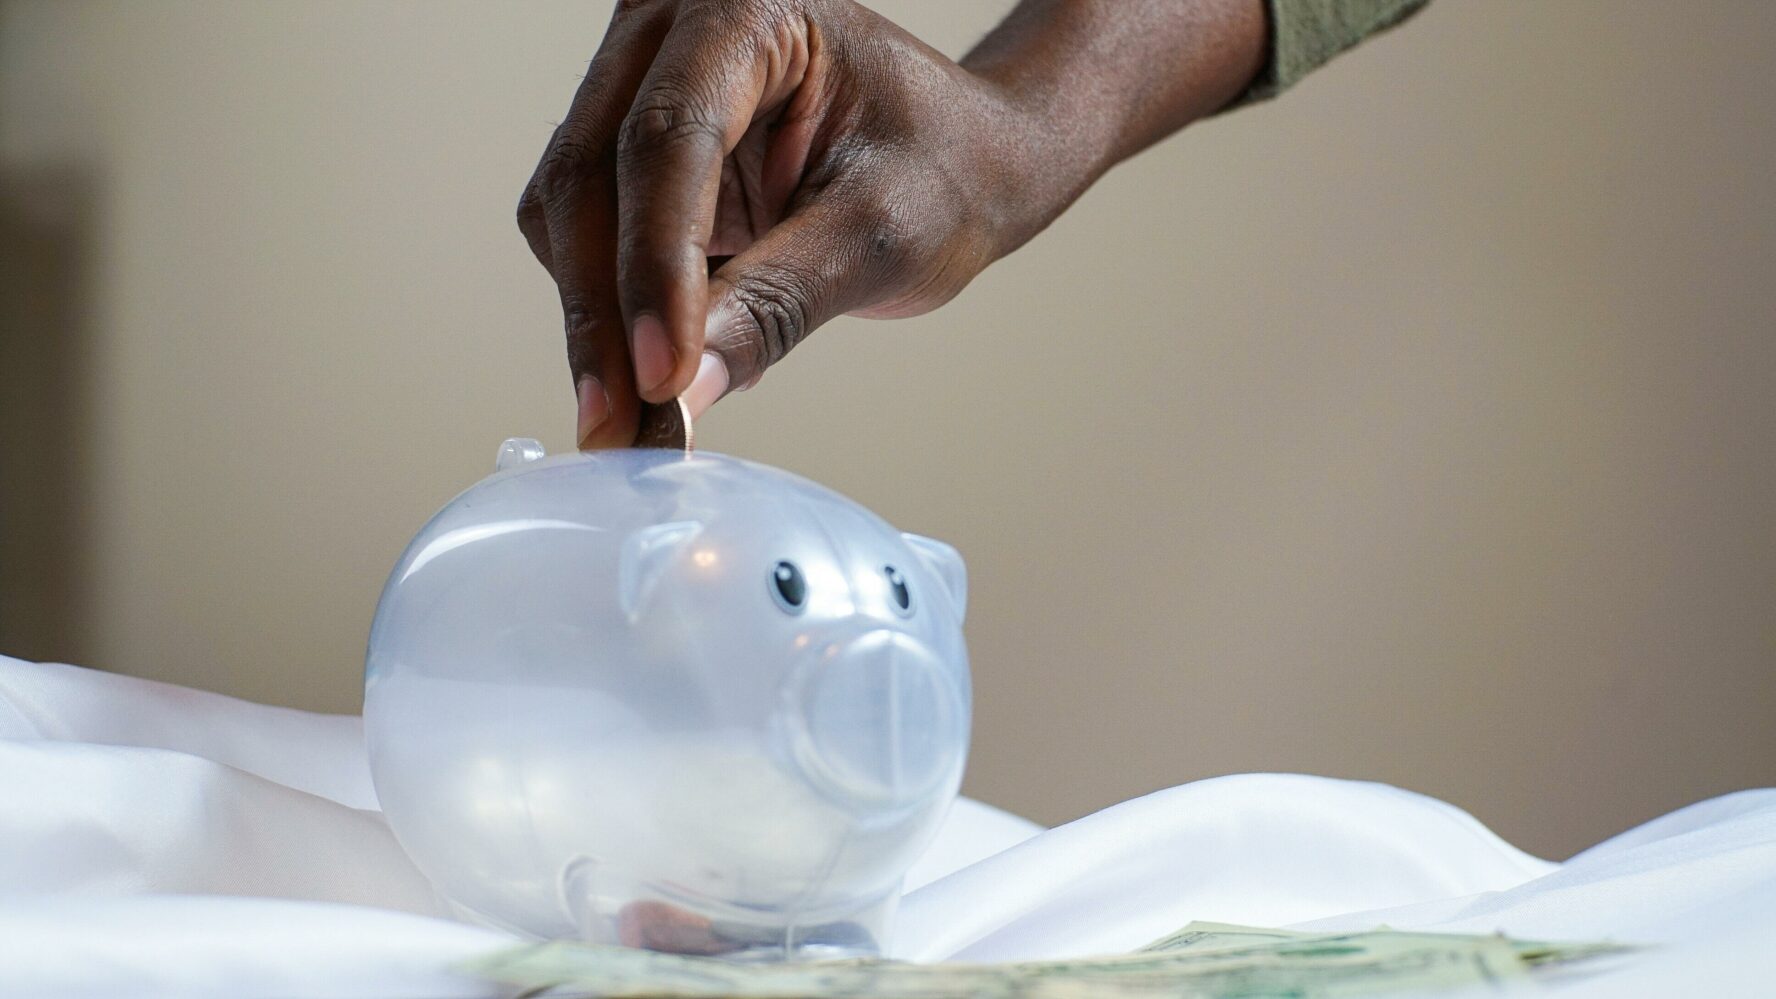 A hand putting coins into a white piggy bank.